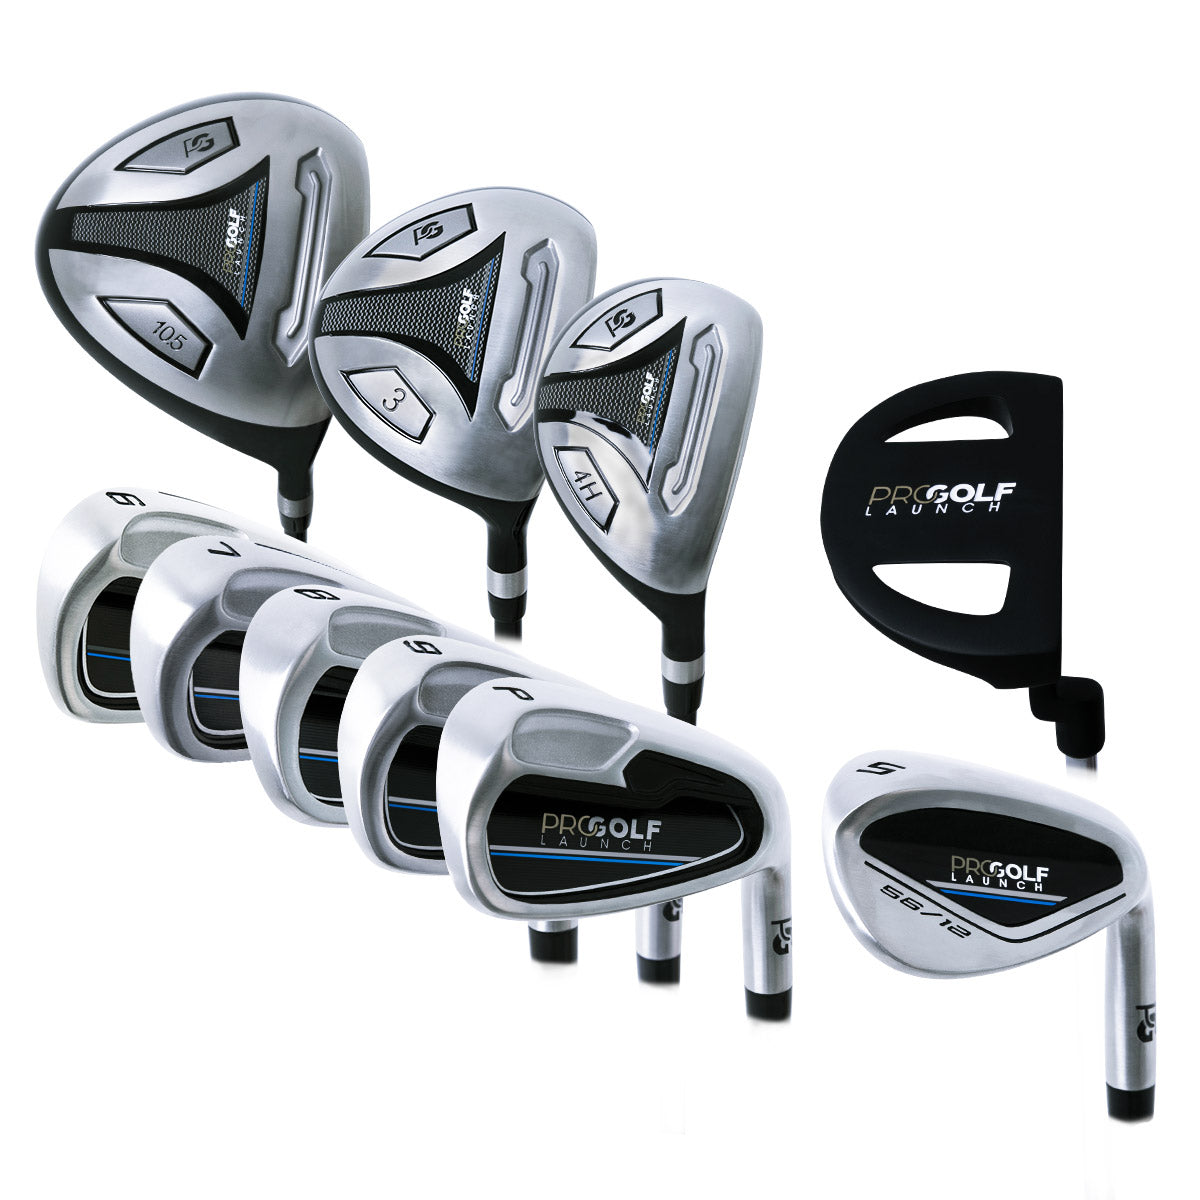 Pro Golf LAUNCH 10-piece Golf Club Set - Men's Right Handed